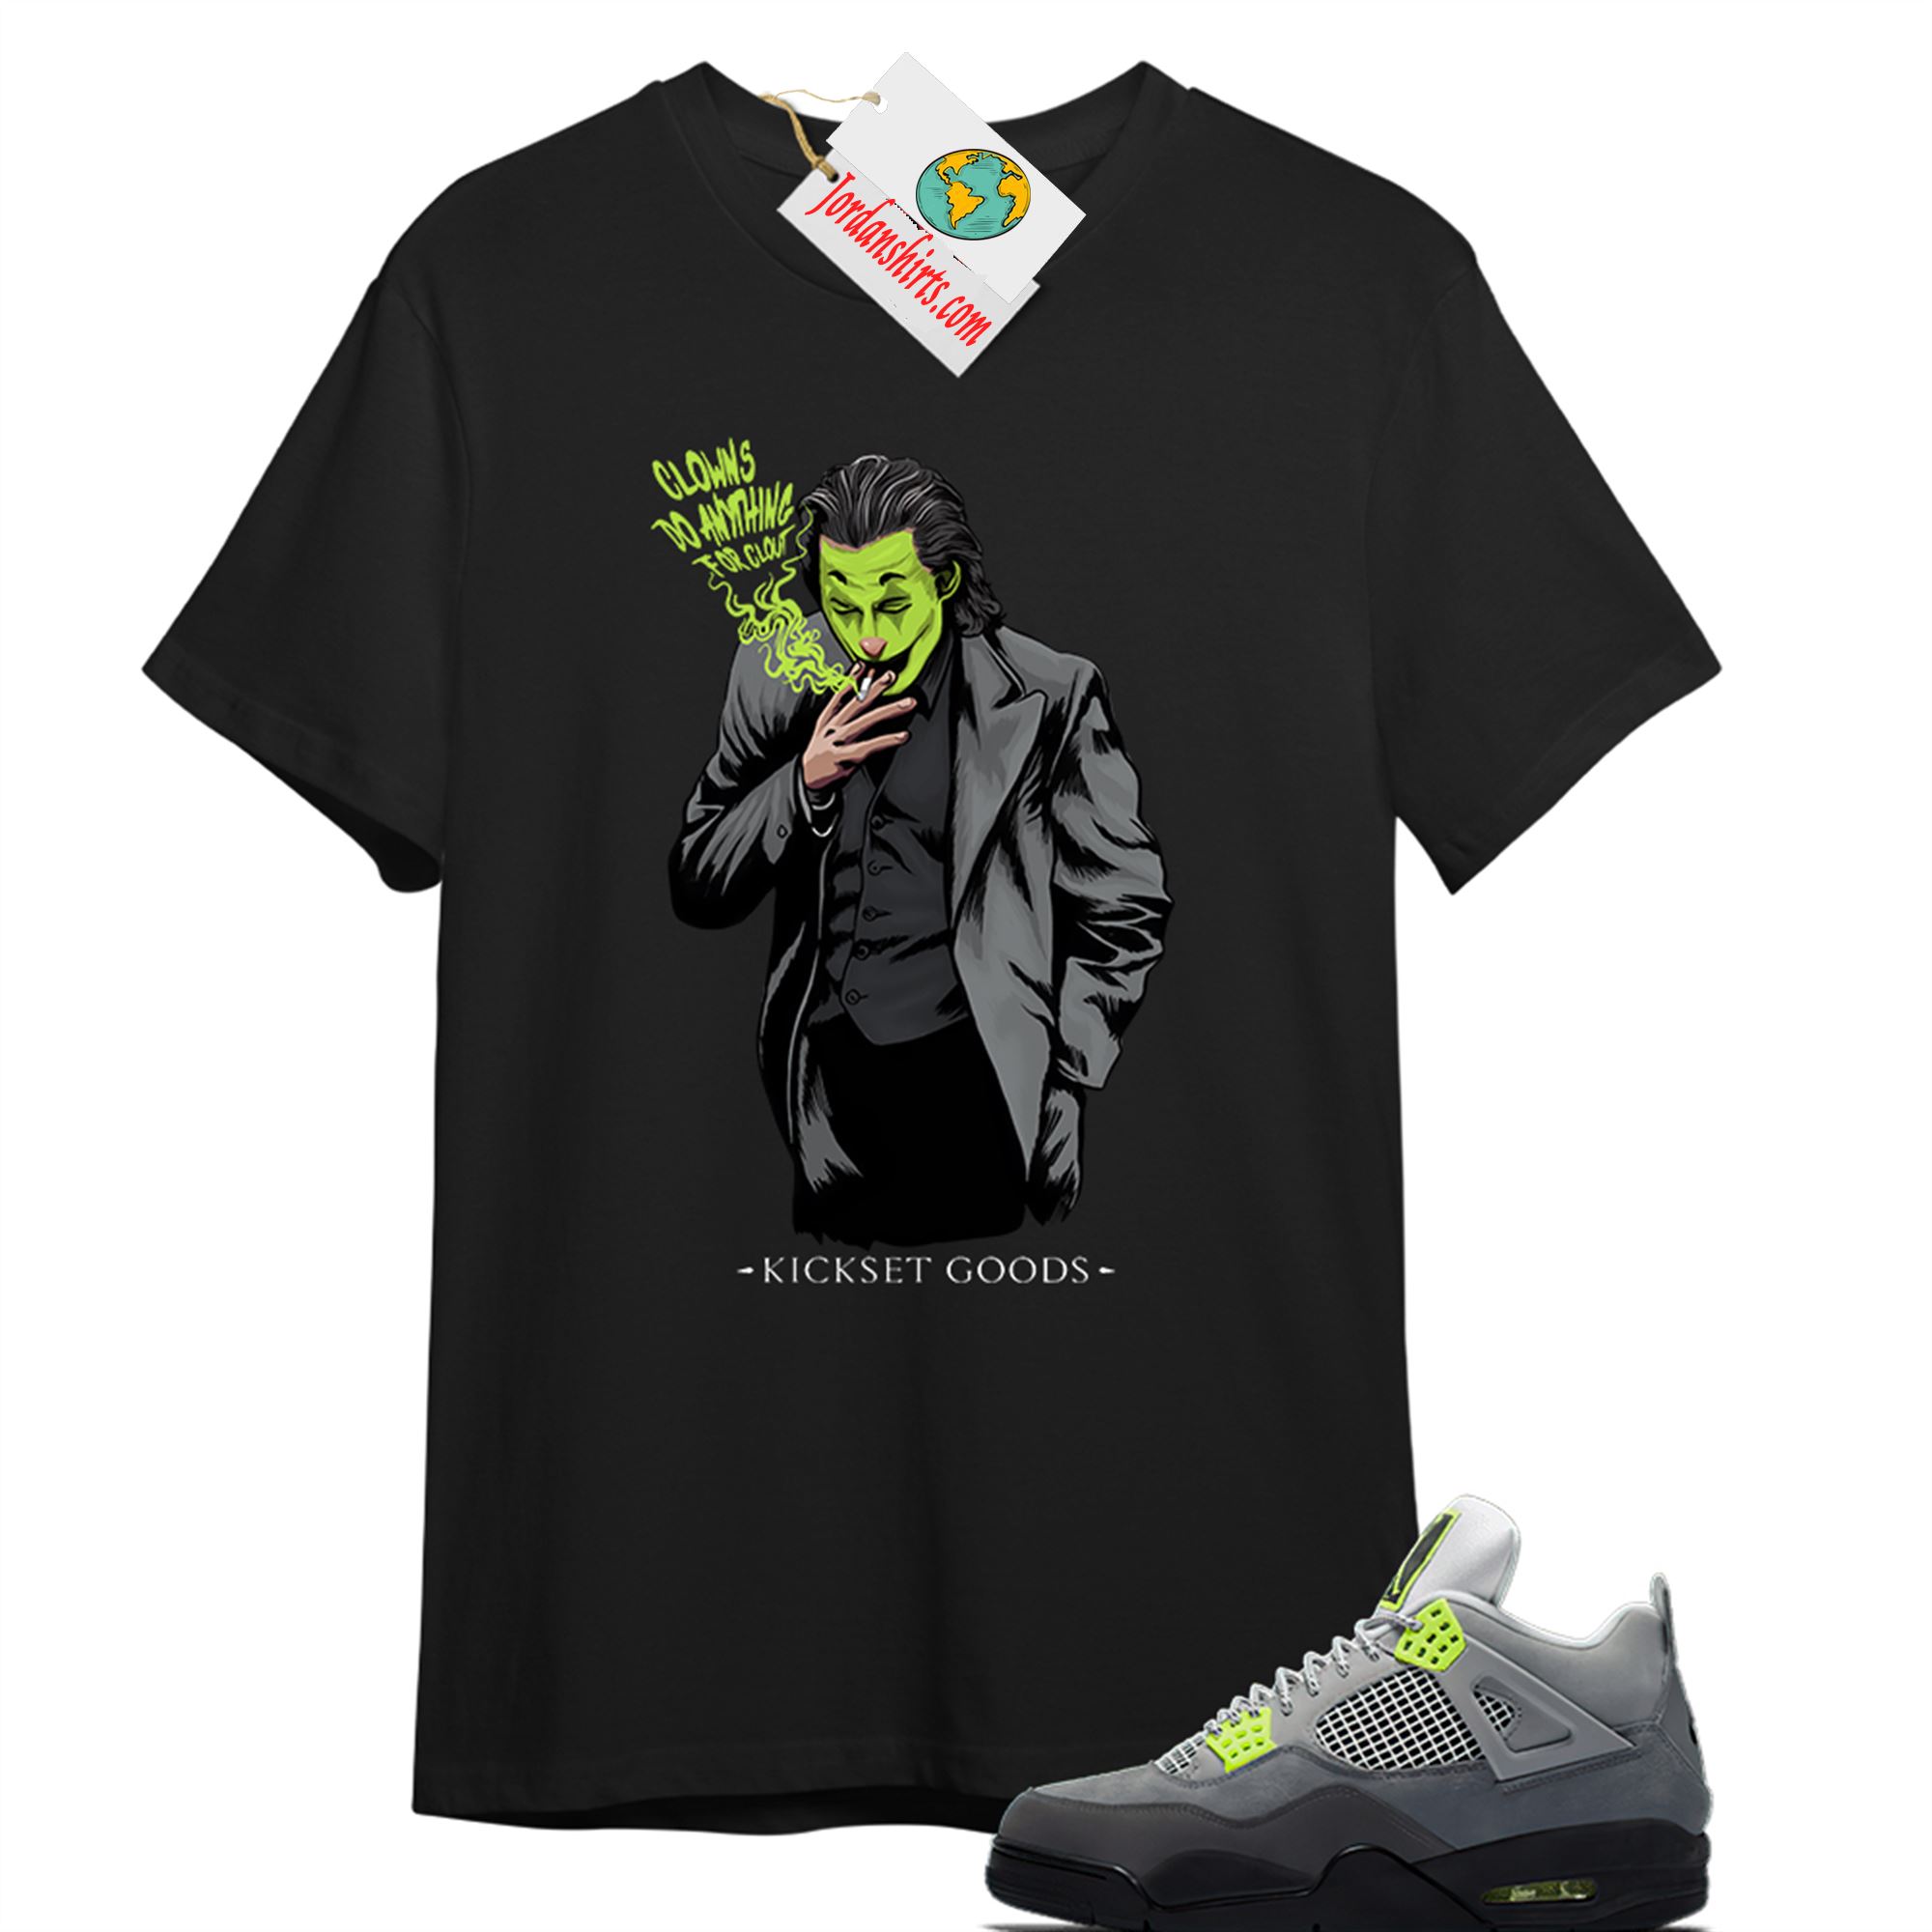 Jordan 4 Shirt, Joker Black T-shirt Air Jordan 4 Neon 95 4s Size Up To 5xl